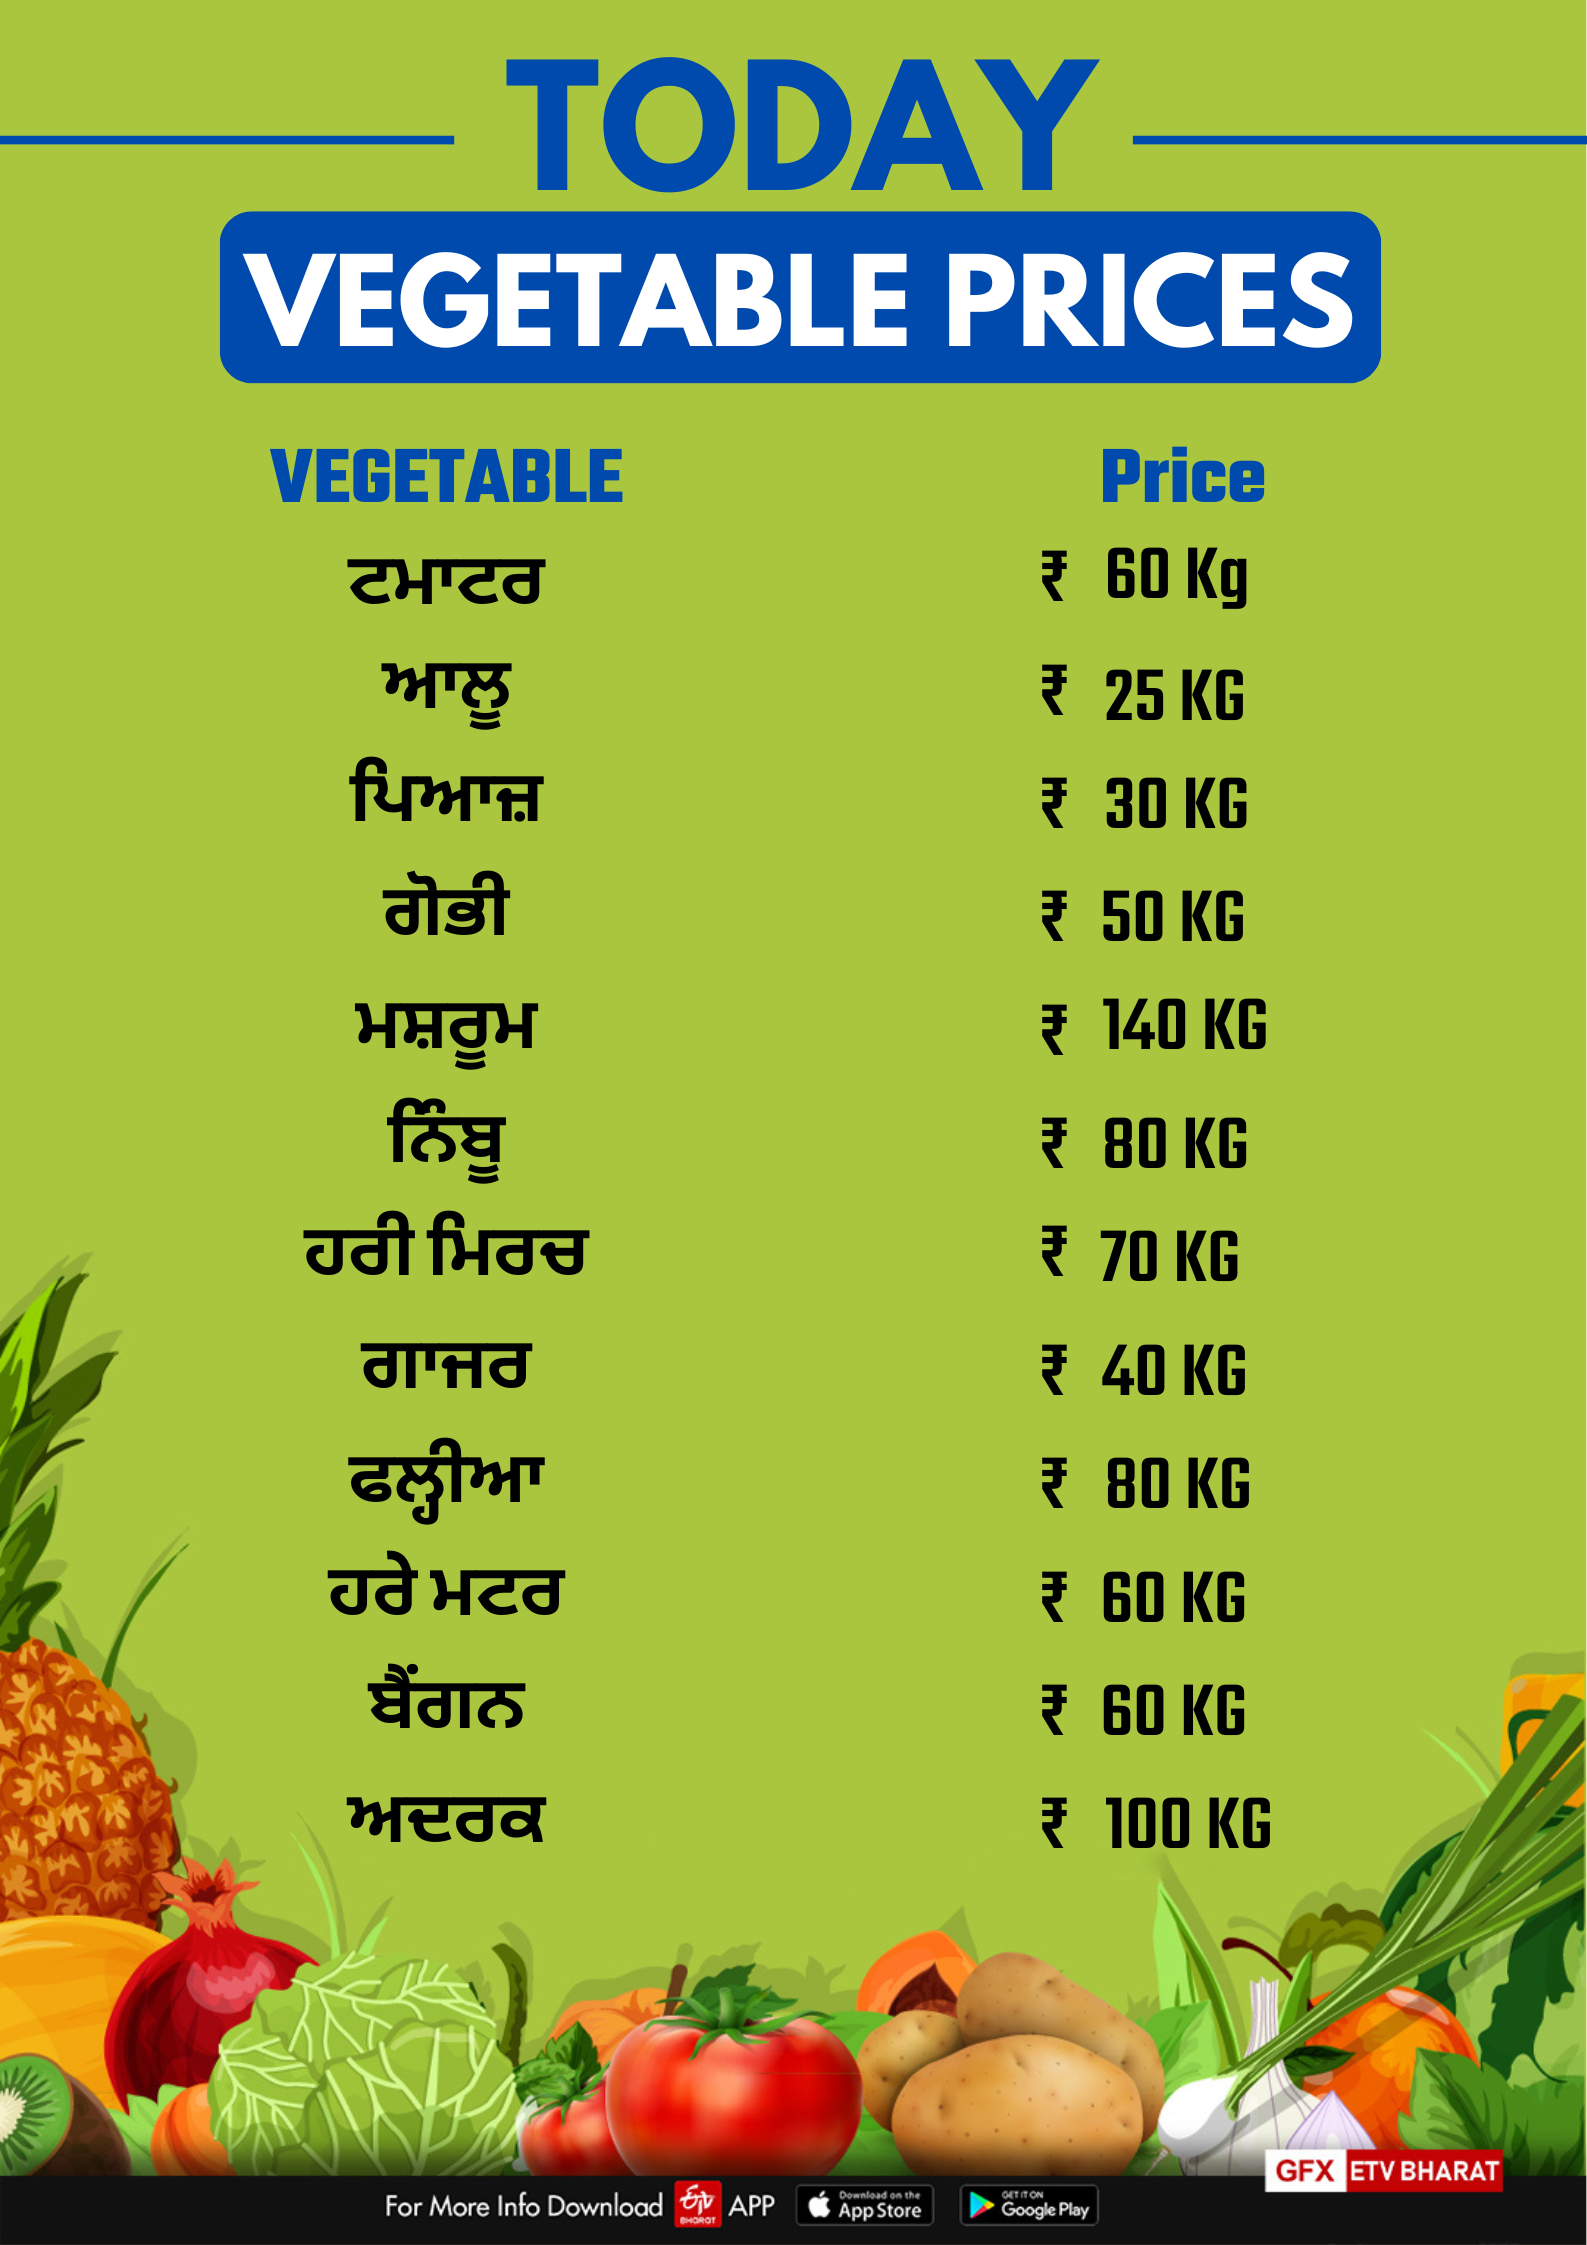 Vegetable rates in Punjab on December 13